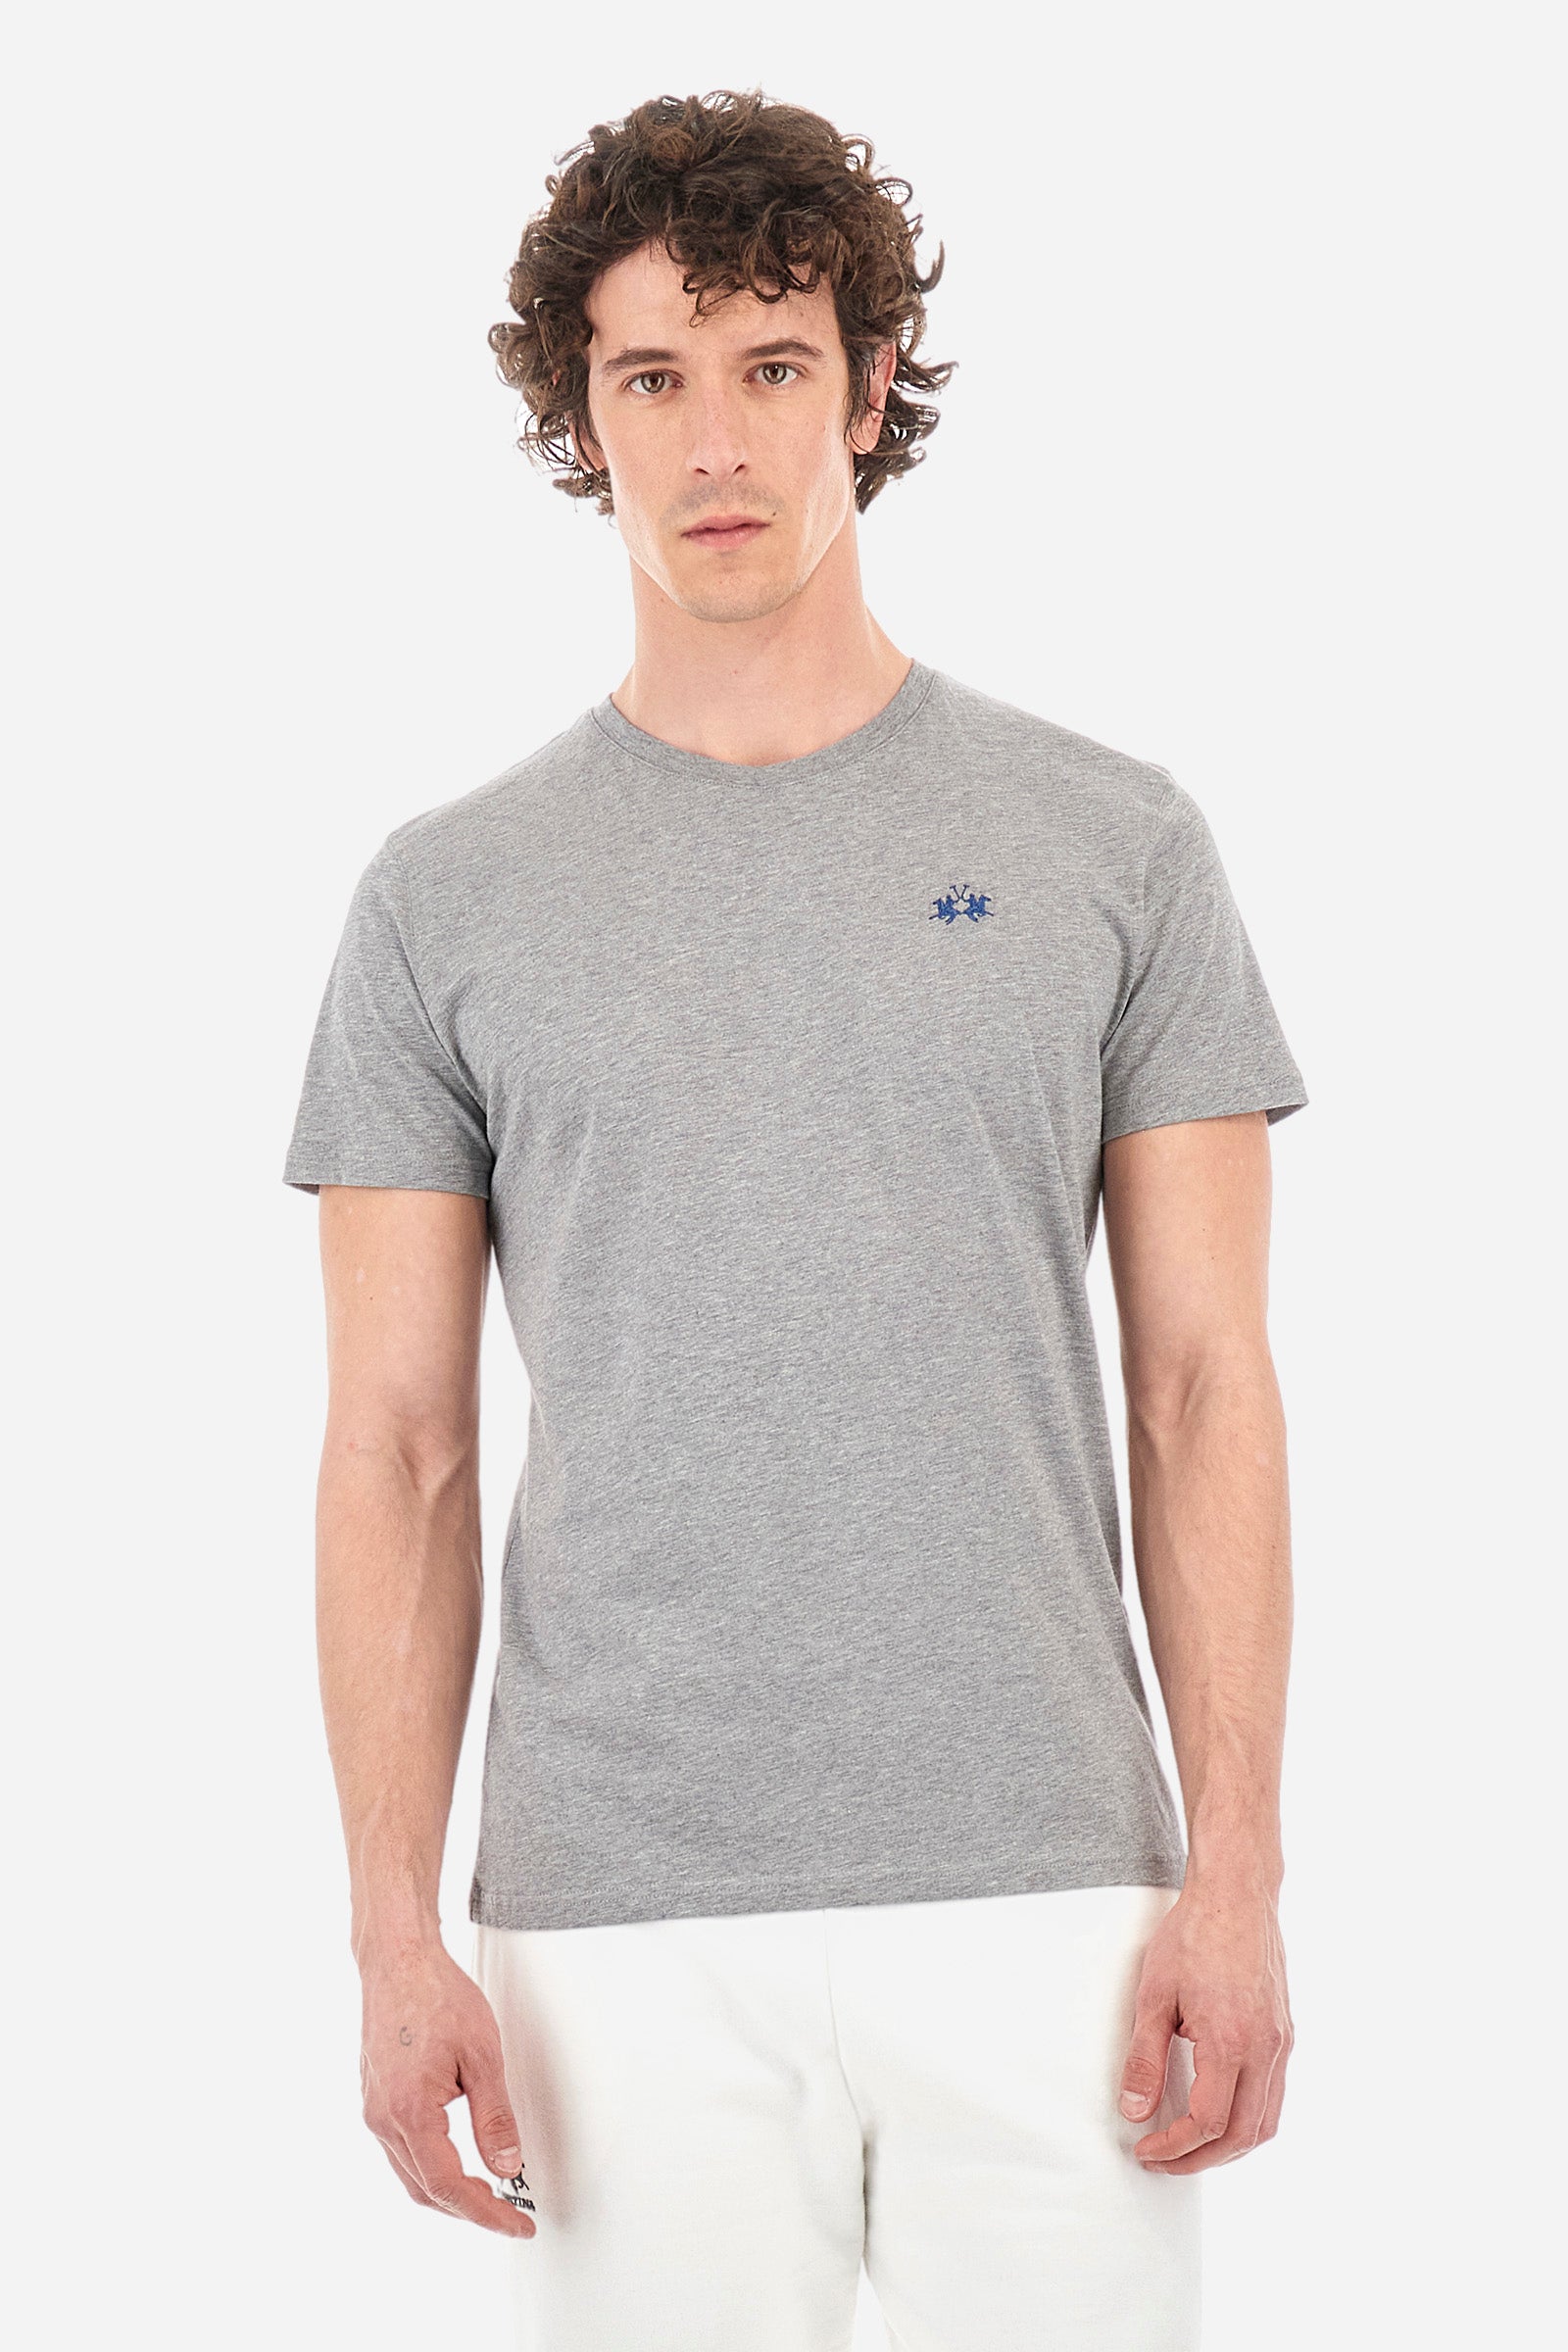 Men's T-shirts in a regular fit - Serge